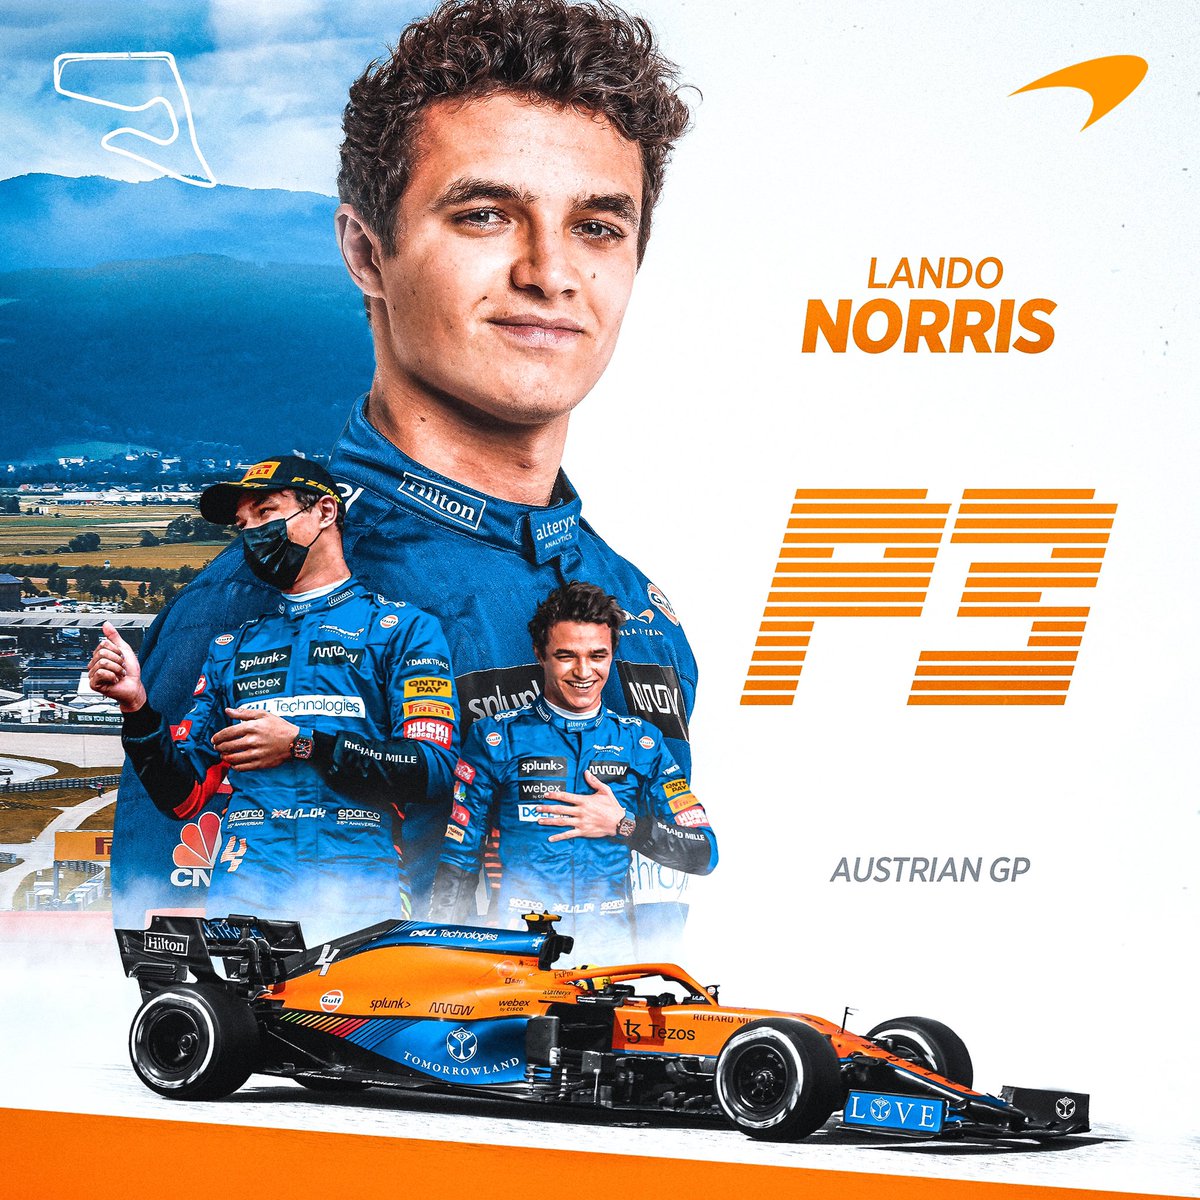 SUPER LANDO! 🤩 It’s a podium for @LandoNorris at the #AustrianGP. What a drive. You deserve this, Lando! 🇦🇹